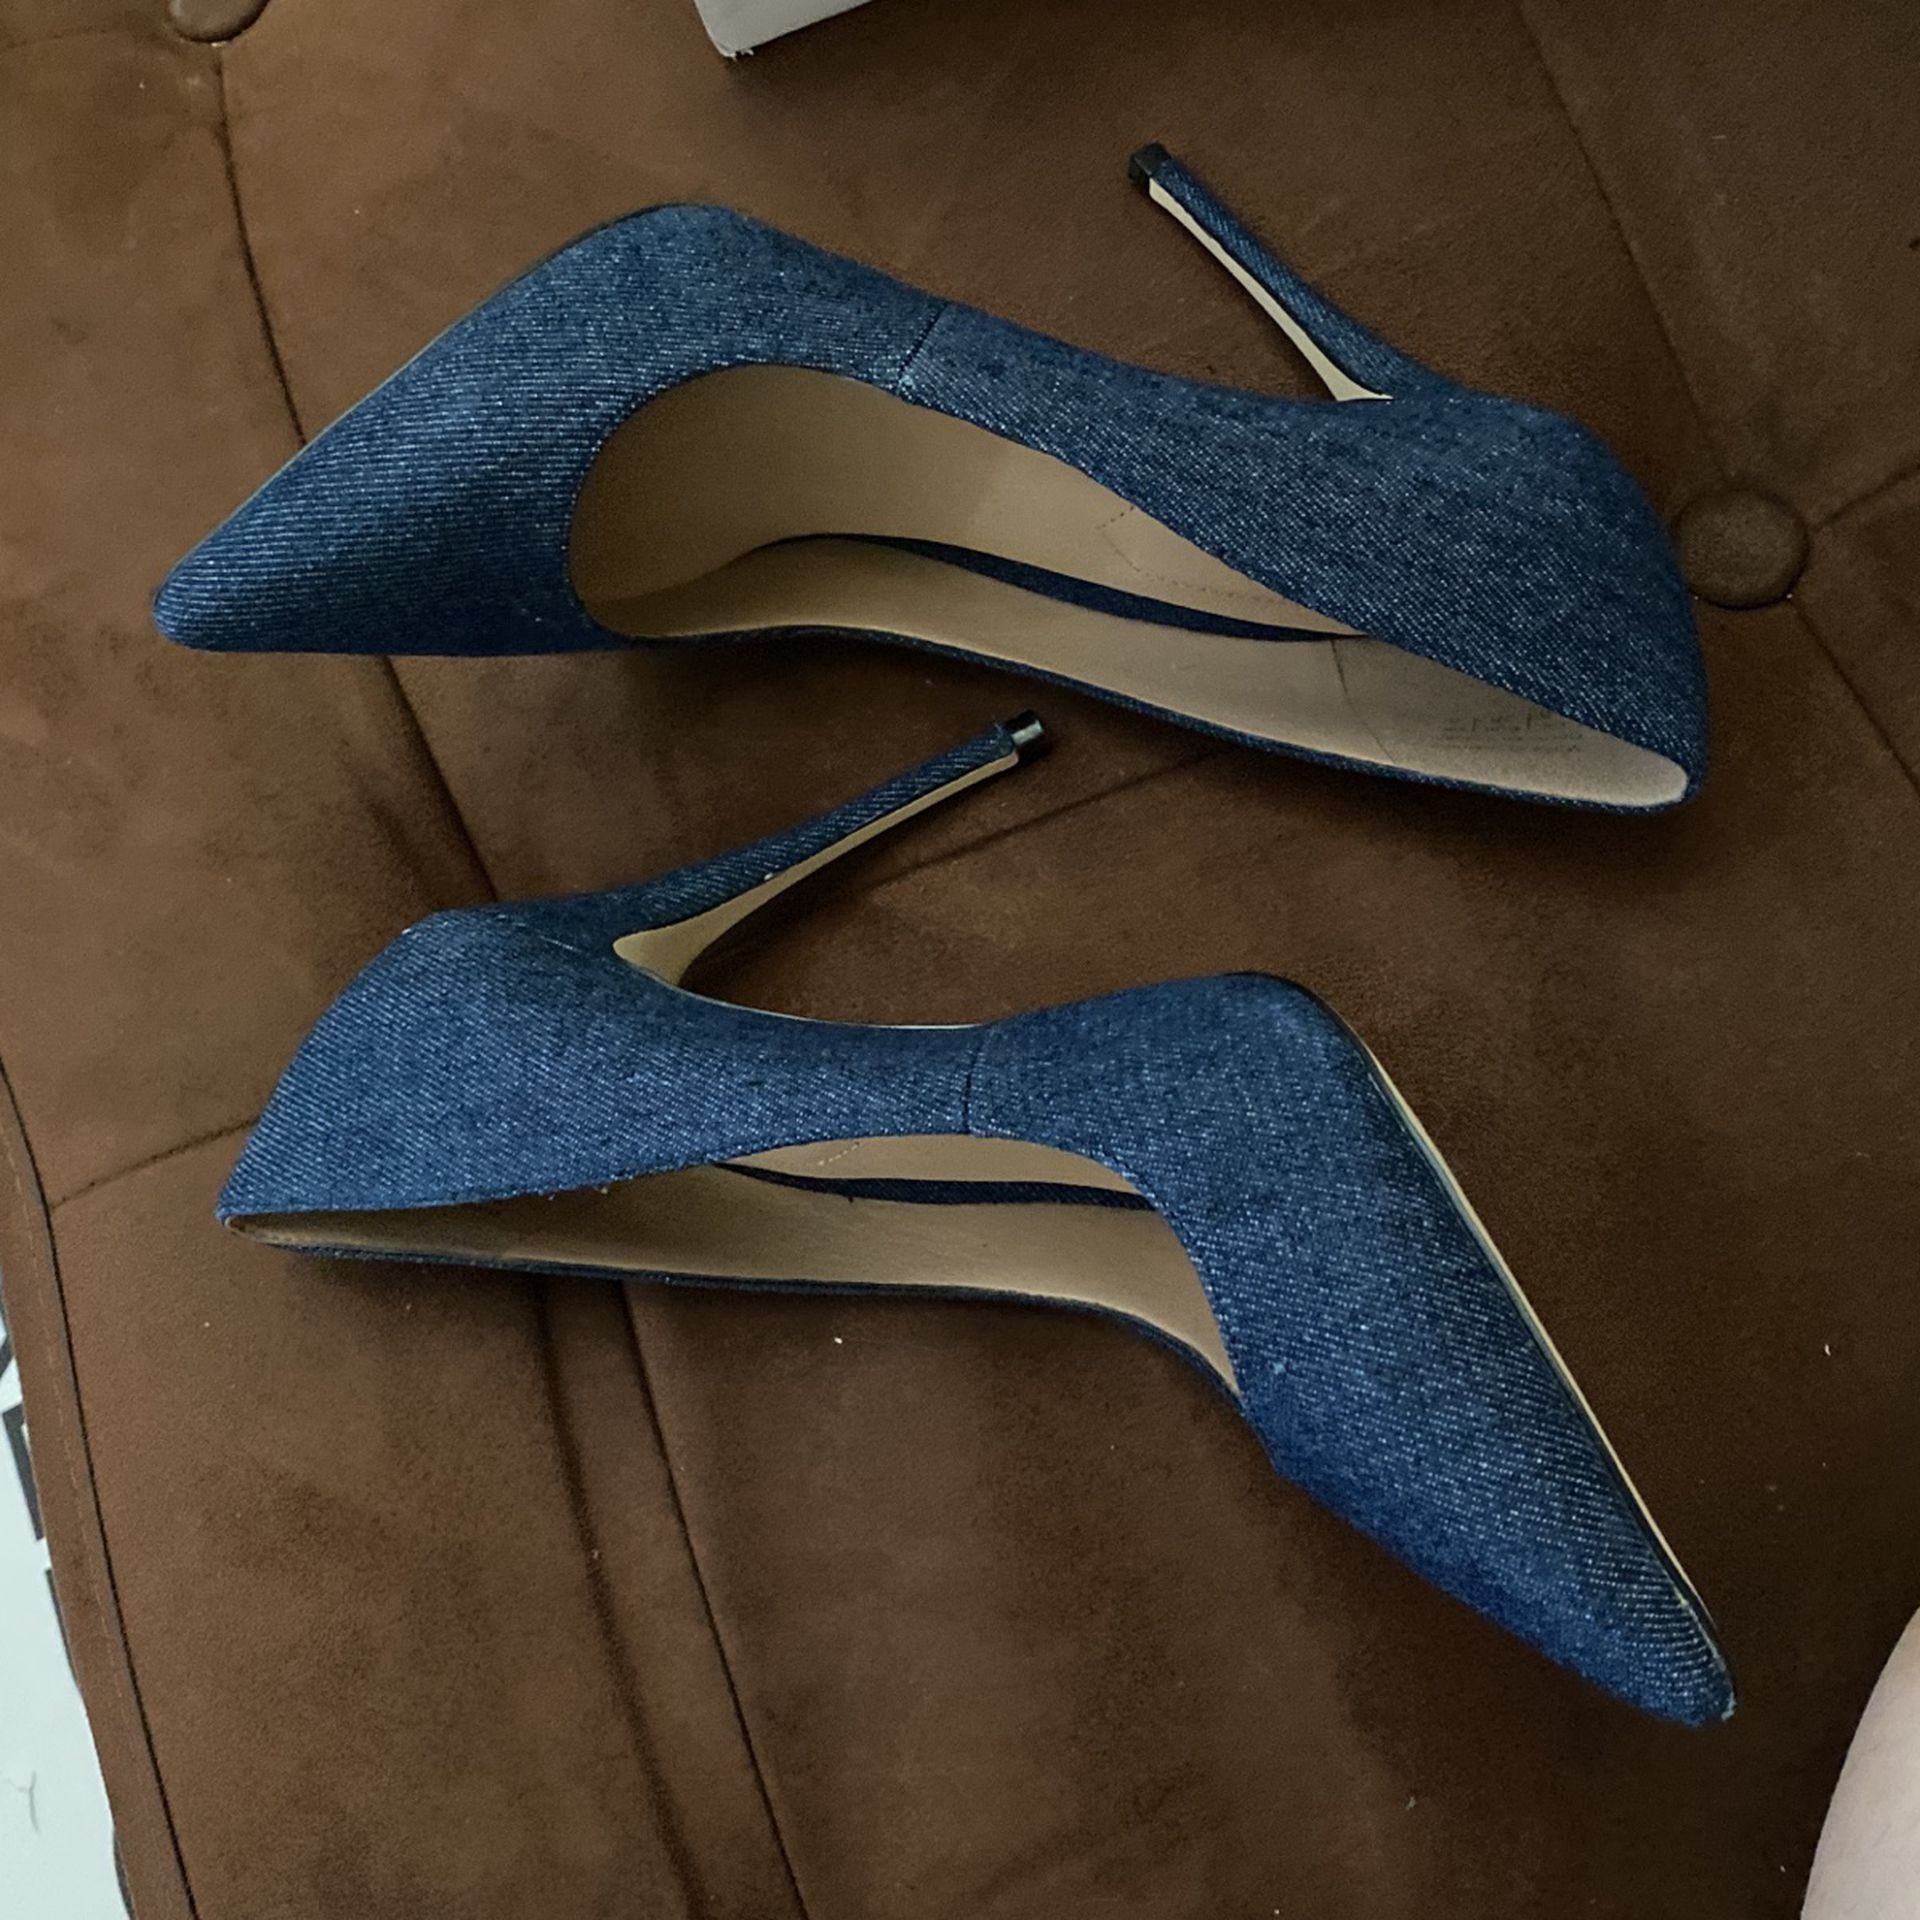 Aldo Blue Heels